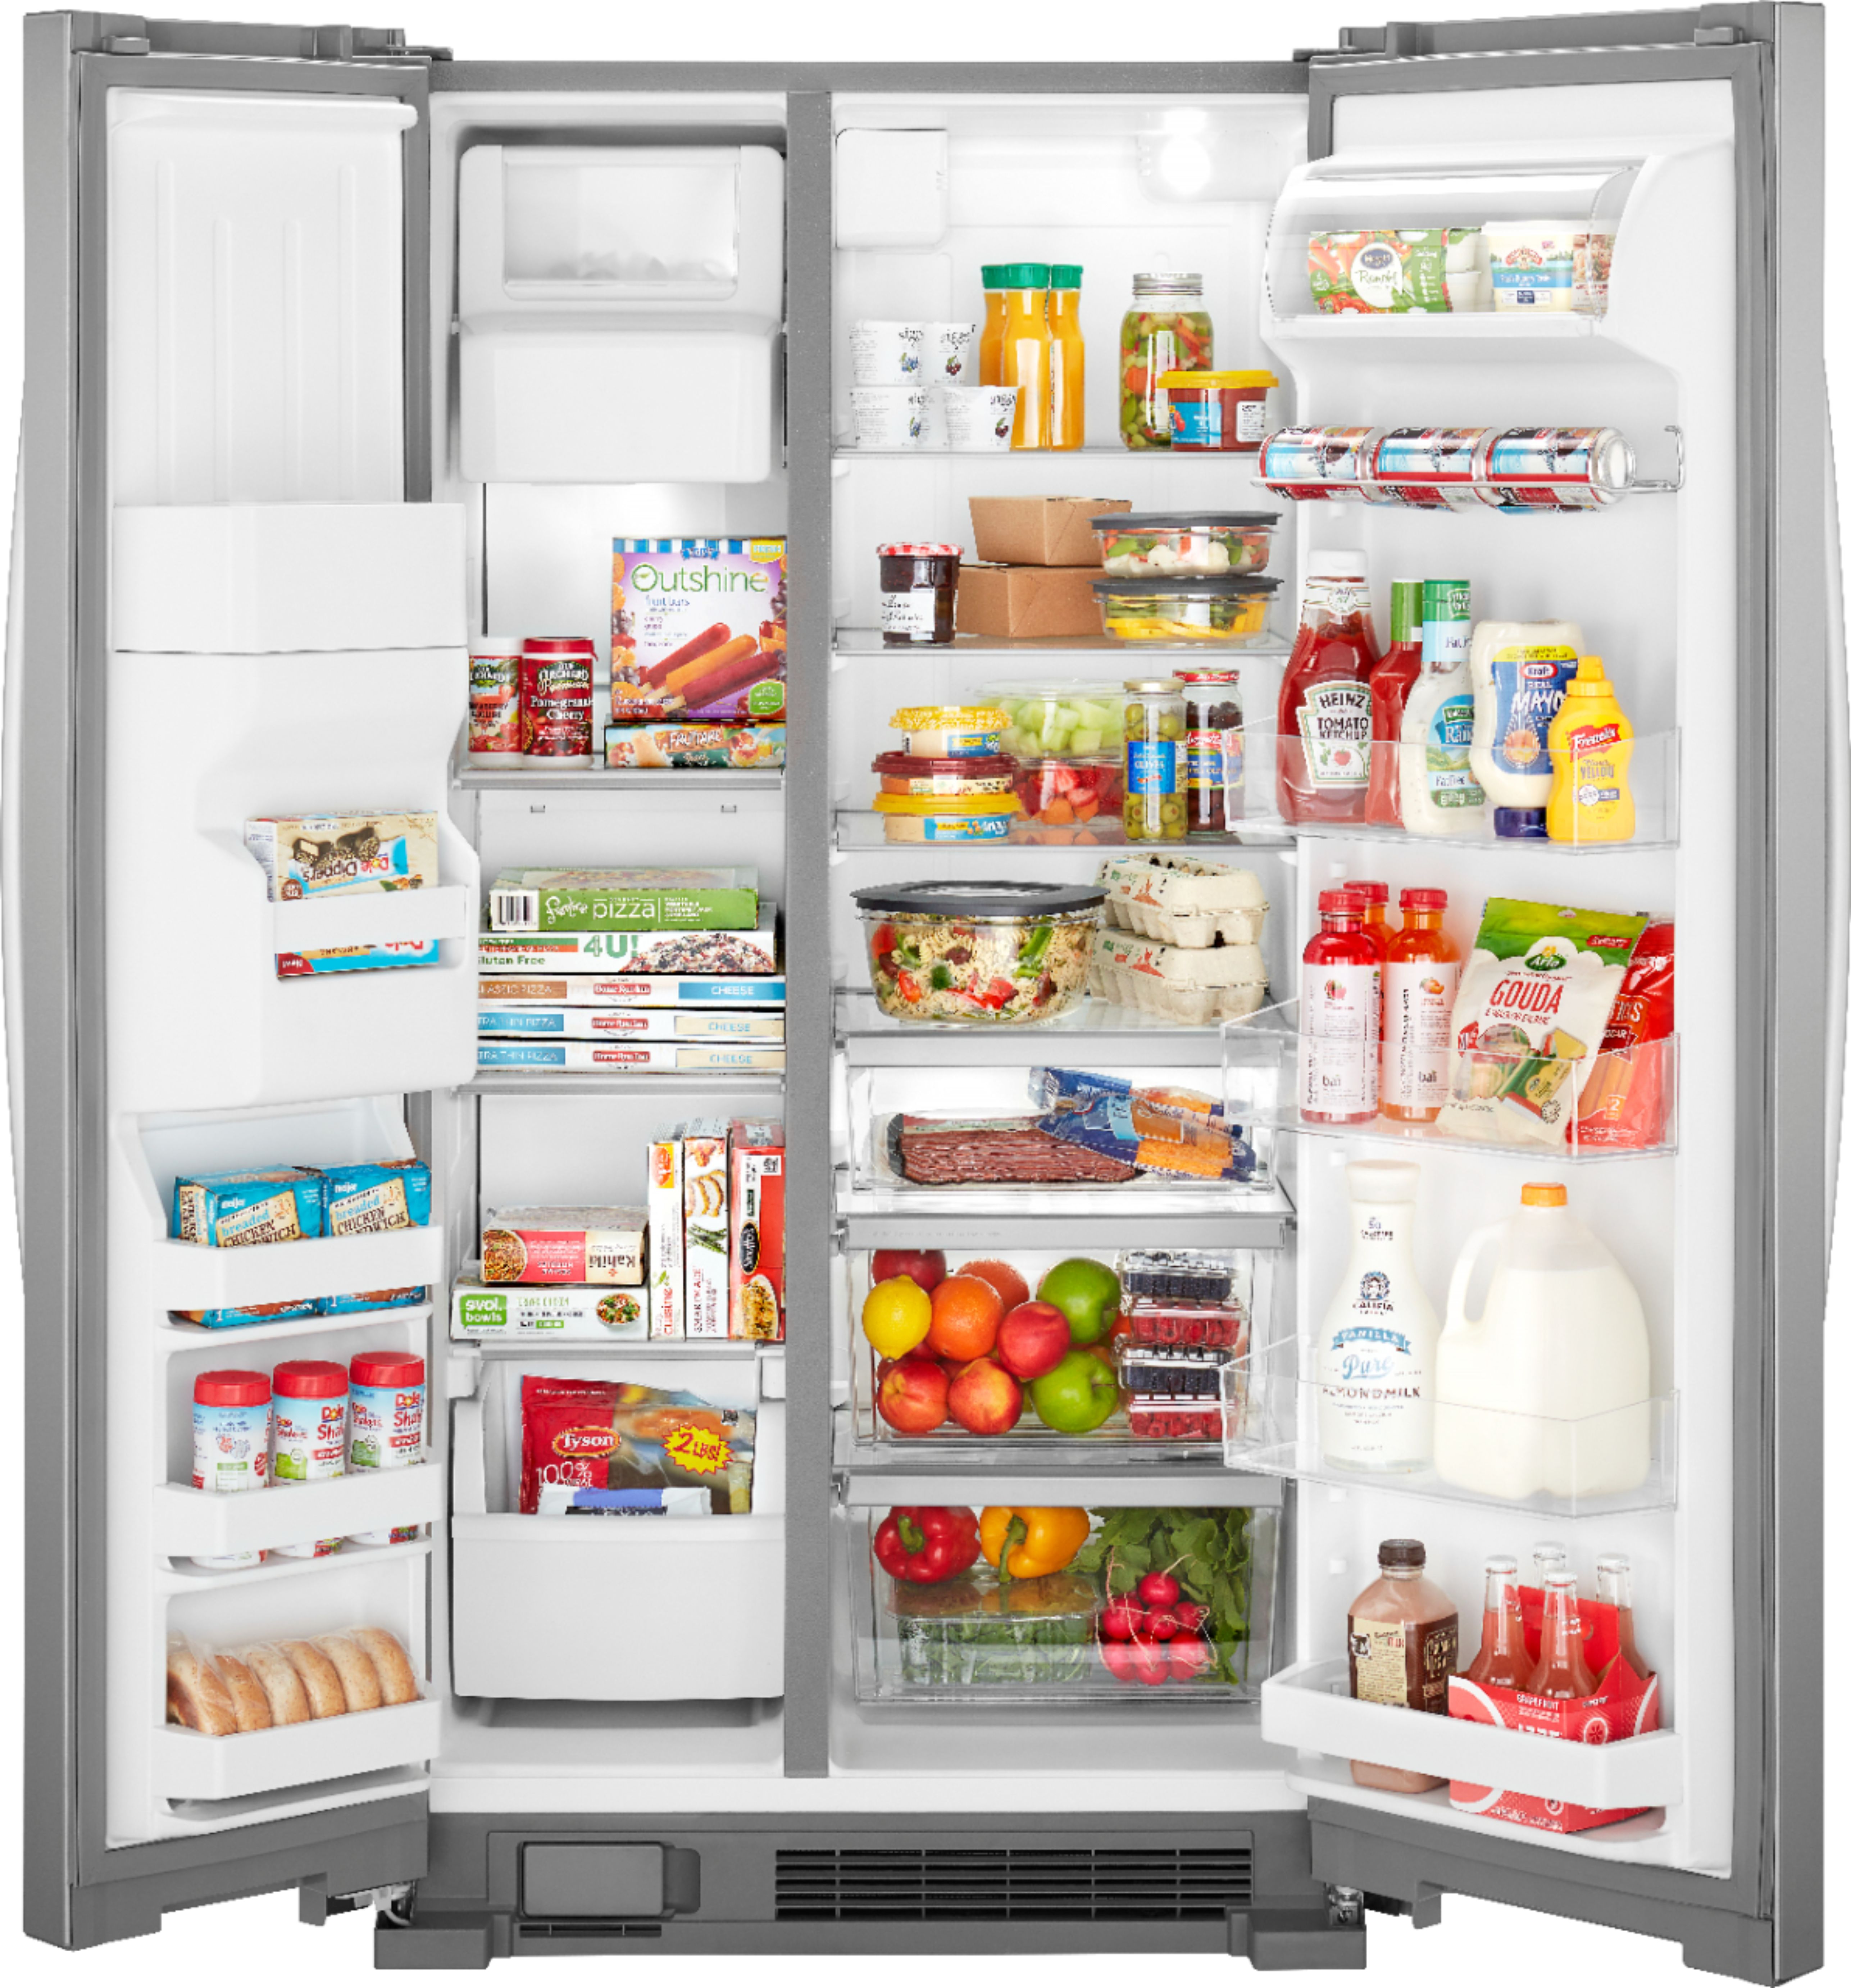 Customer Reviews: Whirlpool 24.6 Cu. Ft. Side-by-Side Refrigerator ...